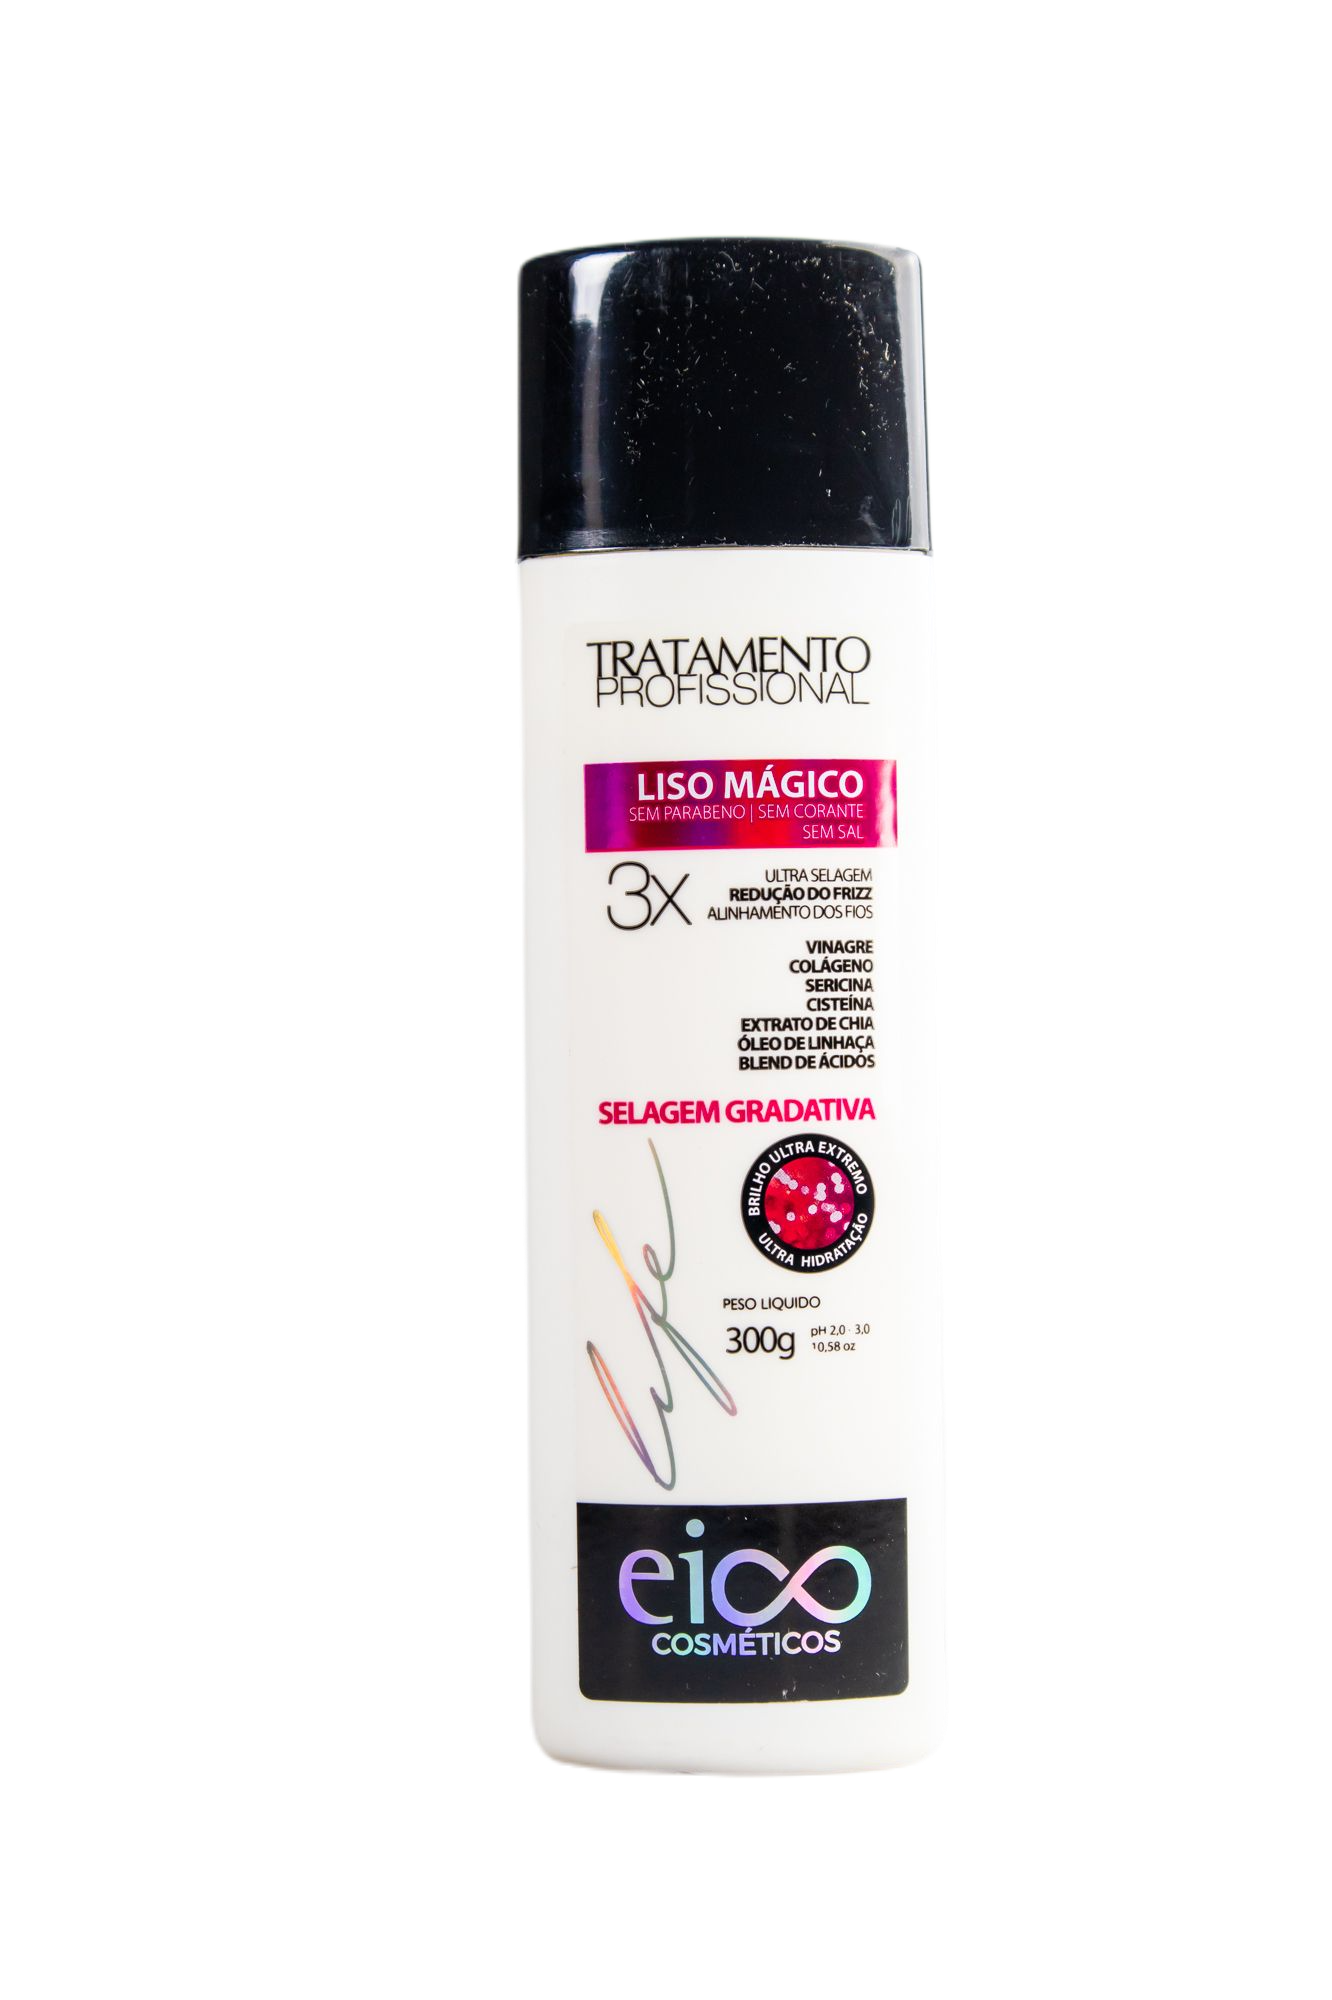 Eico Brazilian Keratin Treatment Magic Smooth Gradual Sealing Alignment Frizz Reduction Treatment 300g - Eico